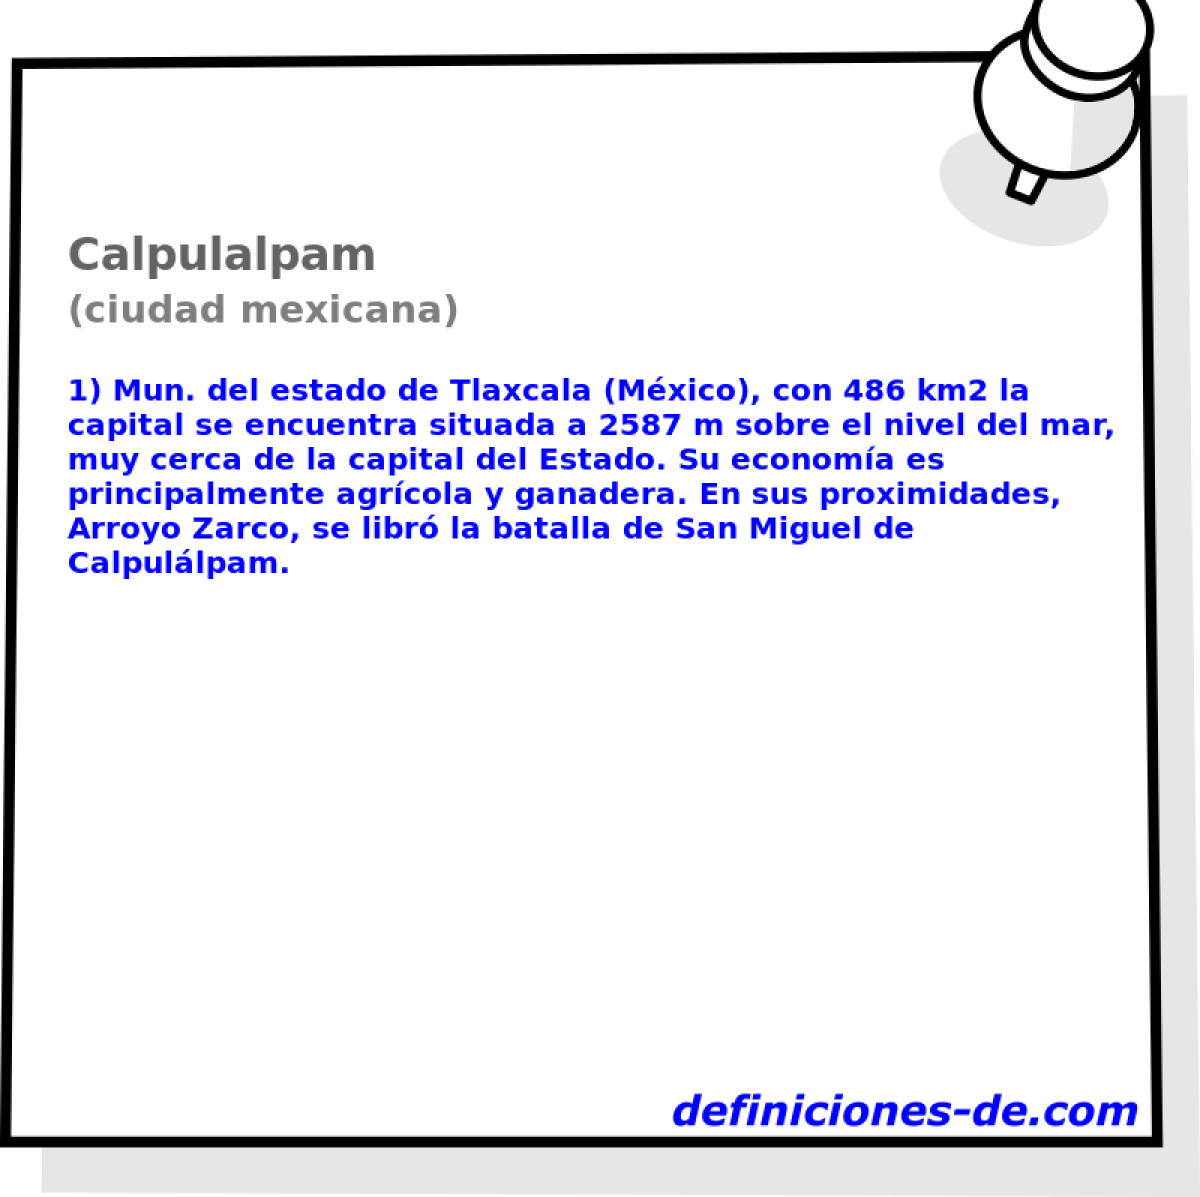 Calpulalpam (ciudad mexicana)